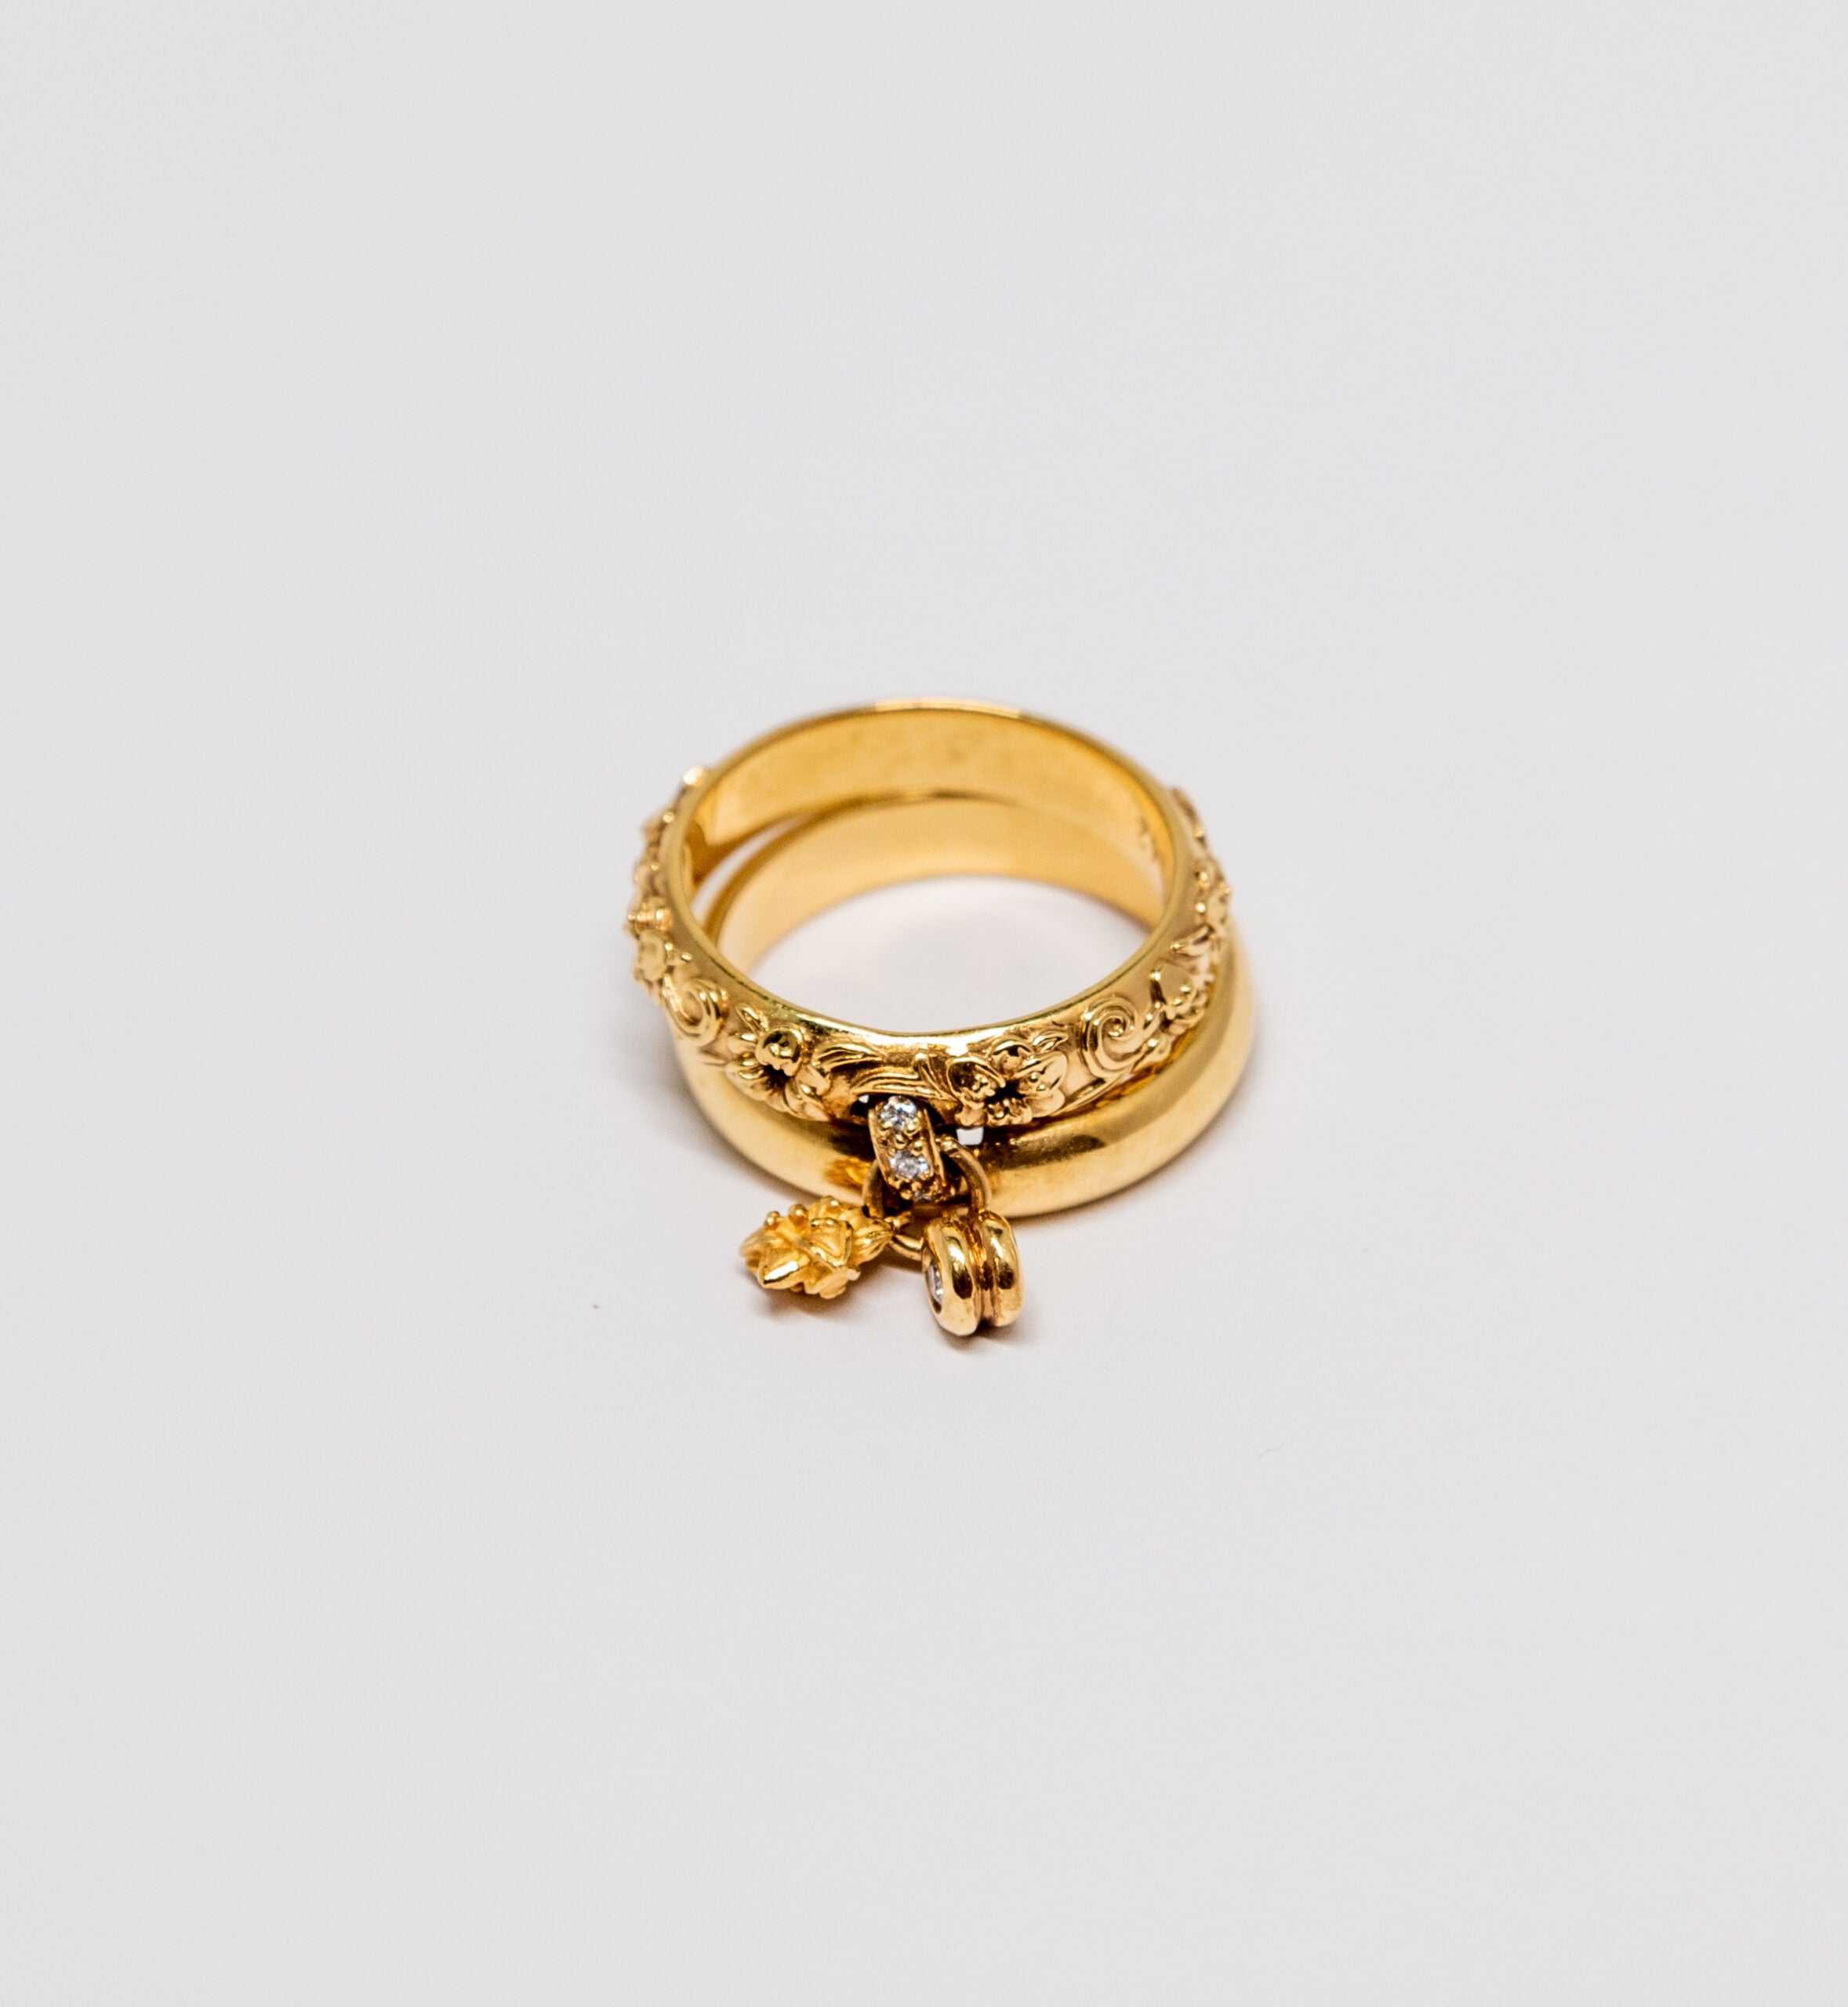 Michou Silver and Gold Ring with Peridot & Topaz- Size 7 | Bluestone Jewelry  | Tahoe City, CA